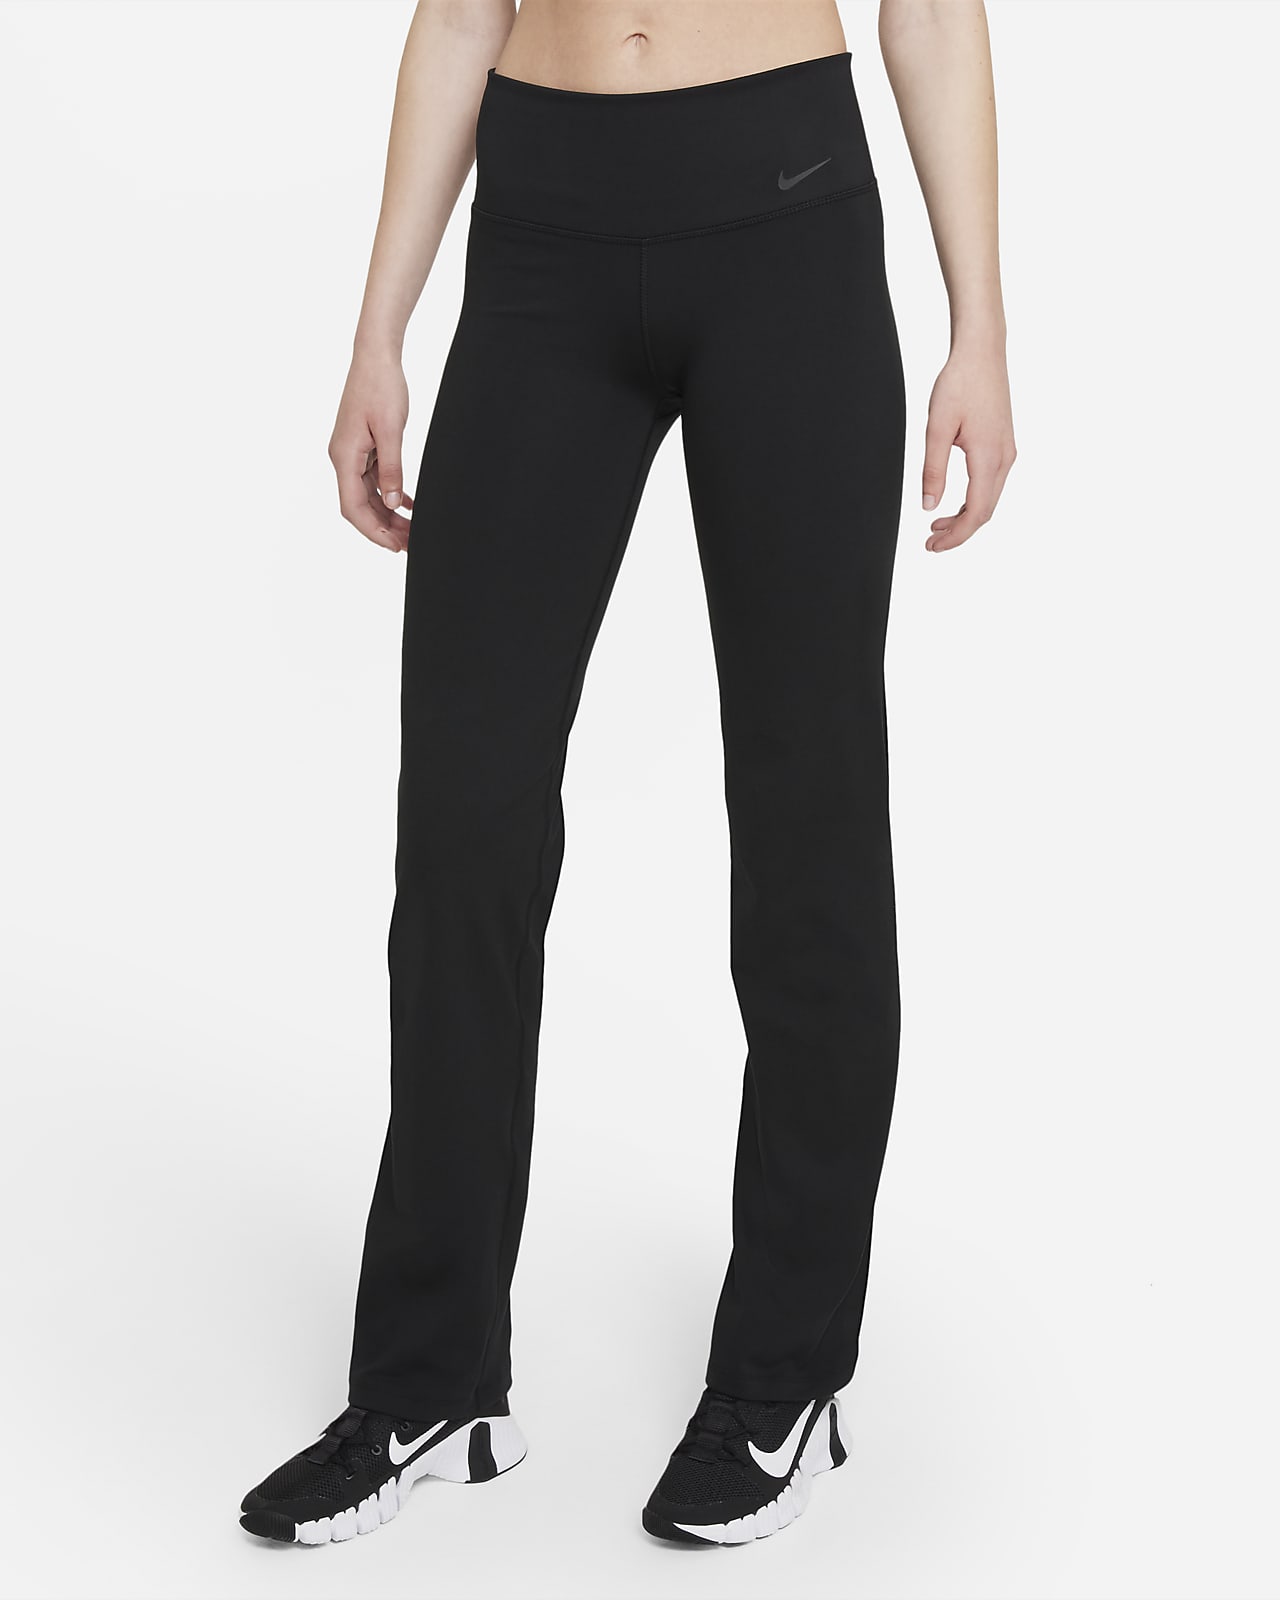 Buy Nike Womens Dri-Fit Straight Leg Yoga Pants Online at